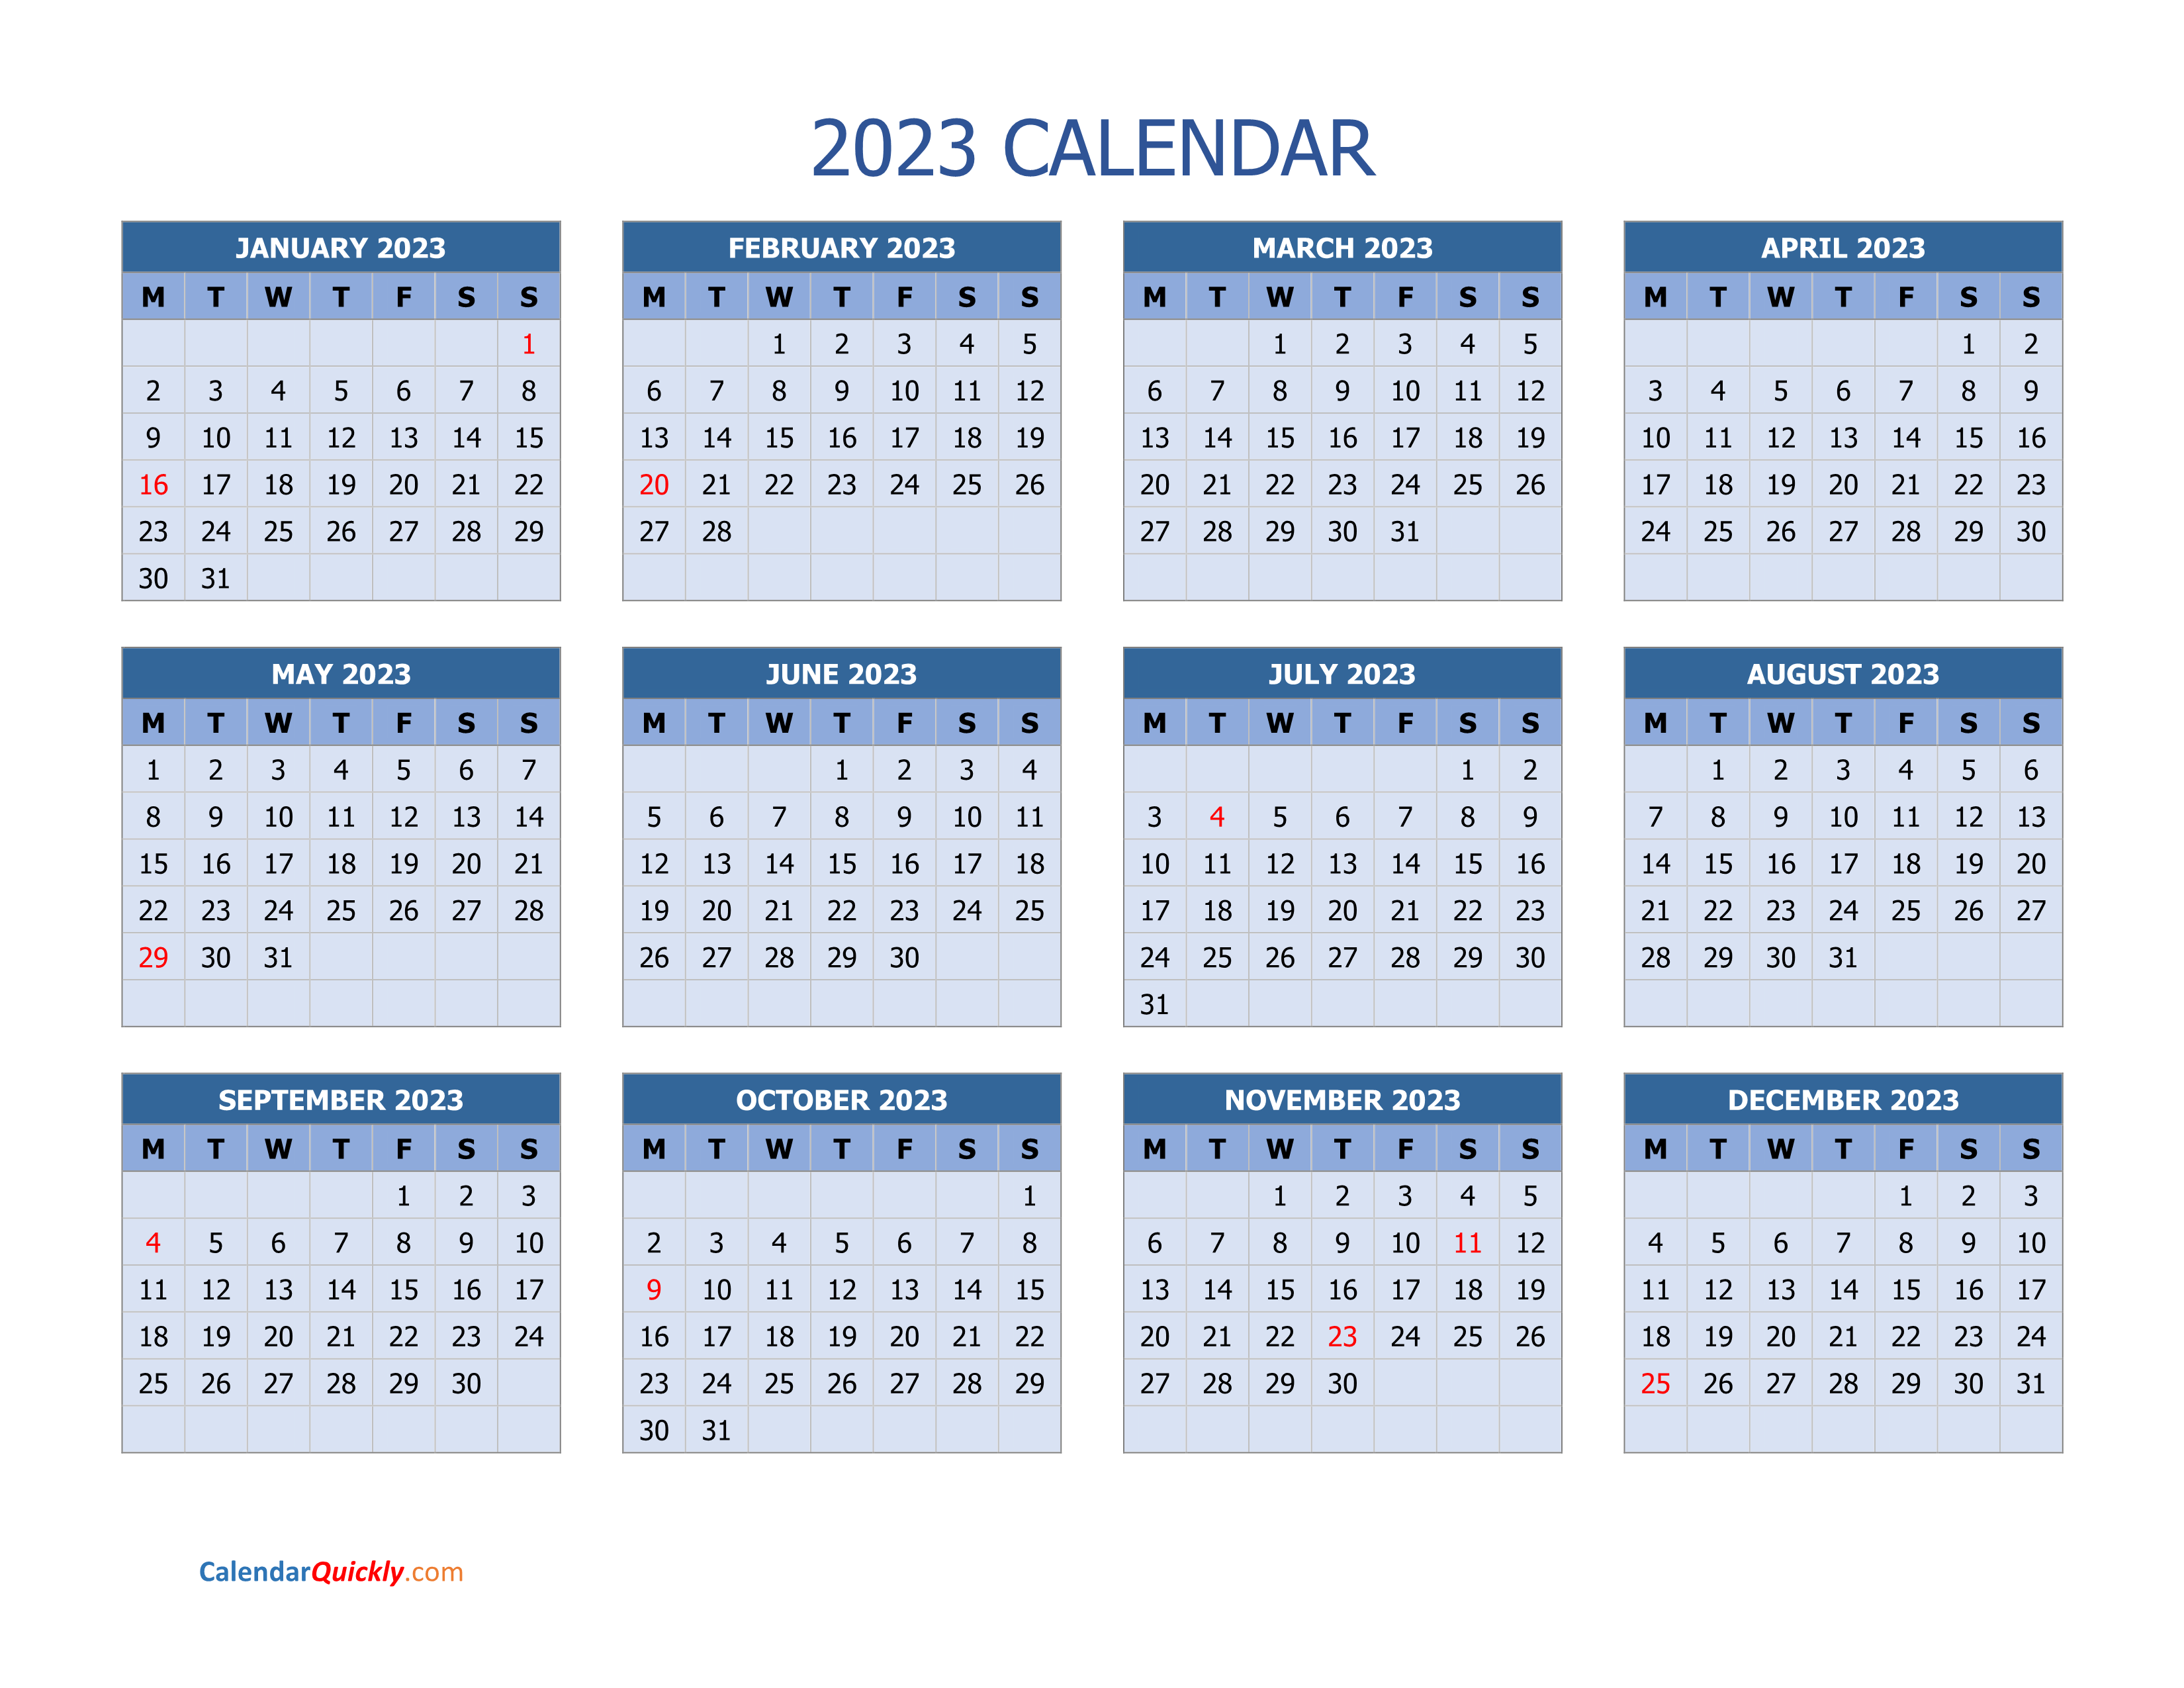 Monday 2023 Calendar Horizontal Calendar Quickly